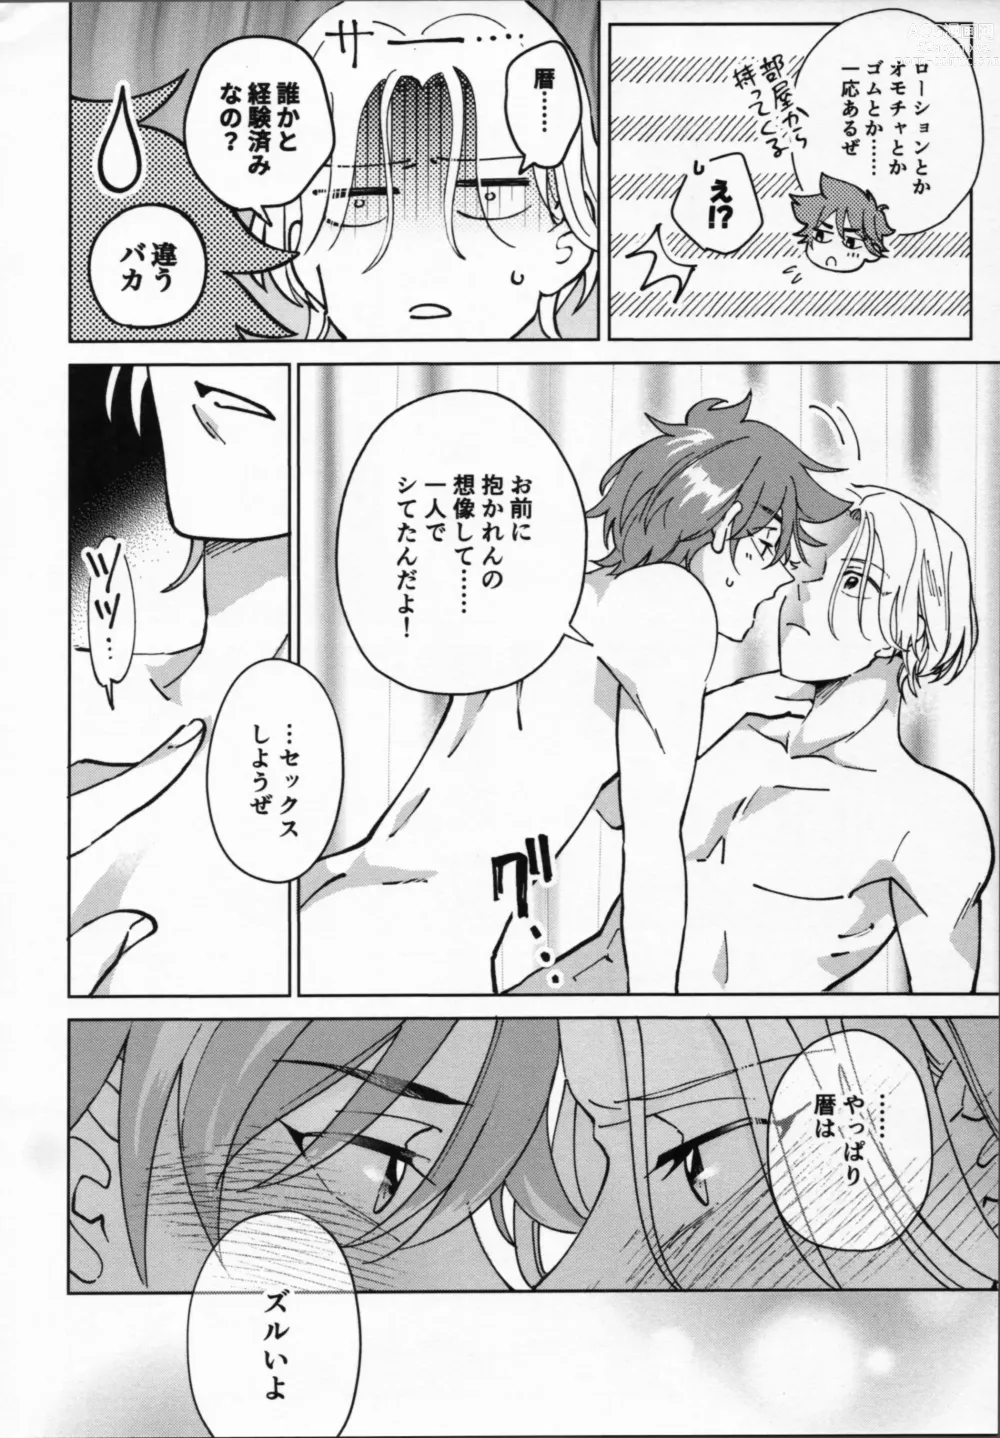 Page 45 of doujinshi Reki ga Warui!